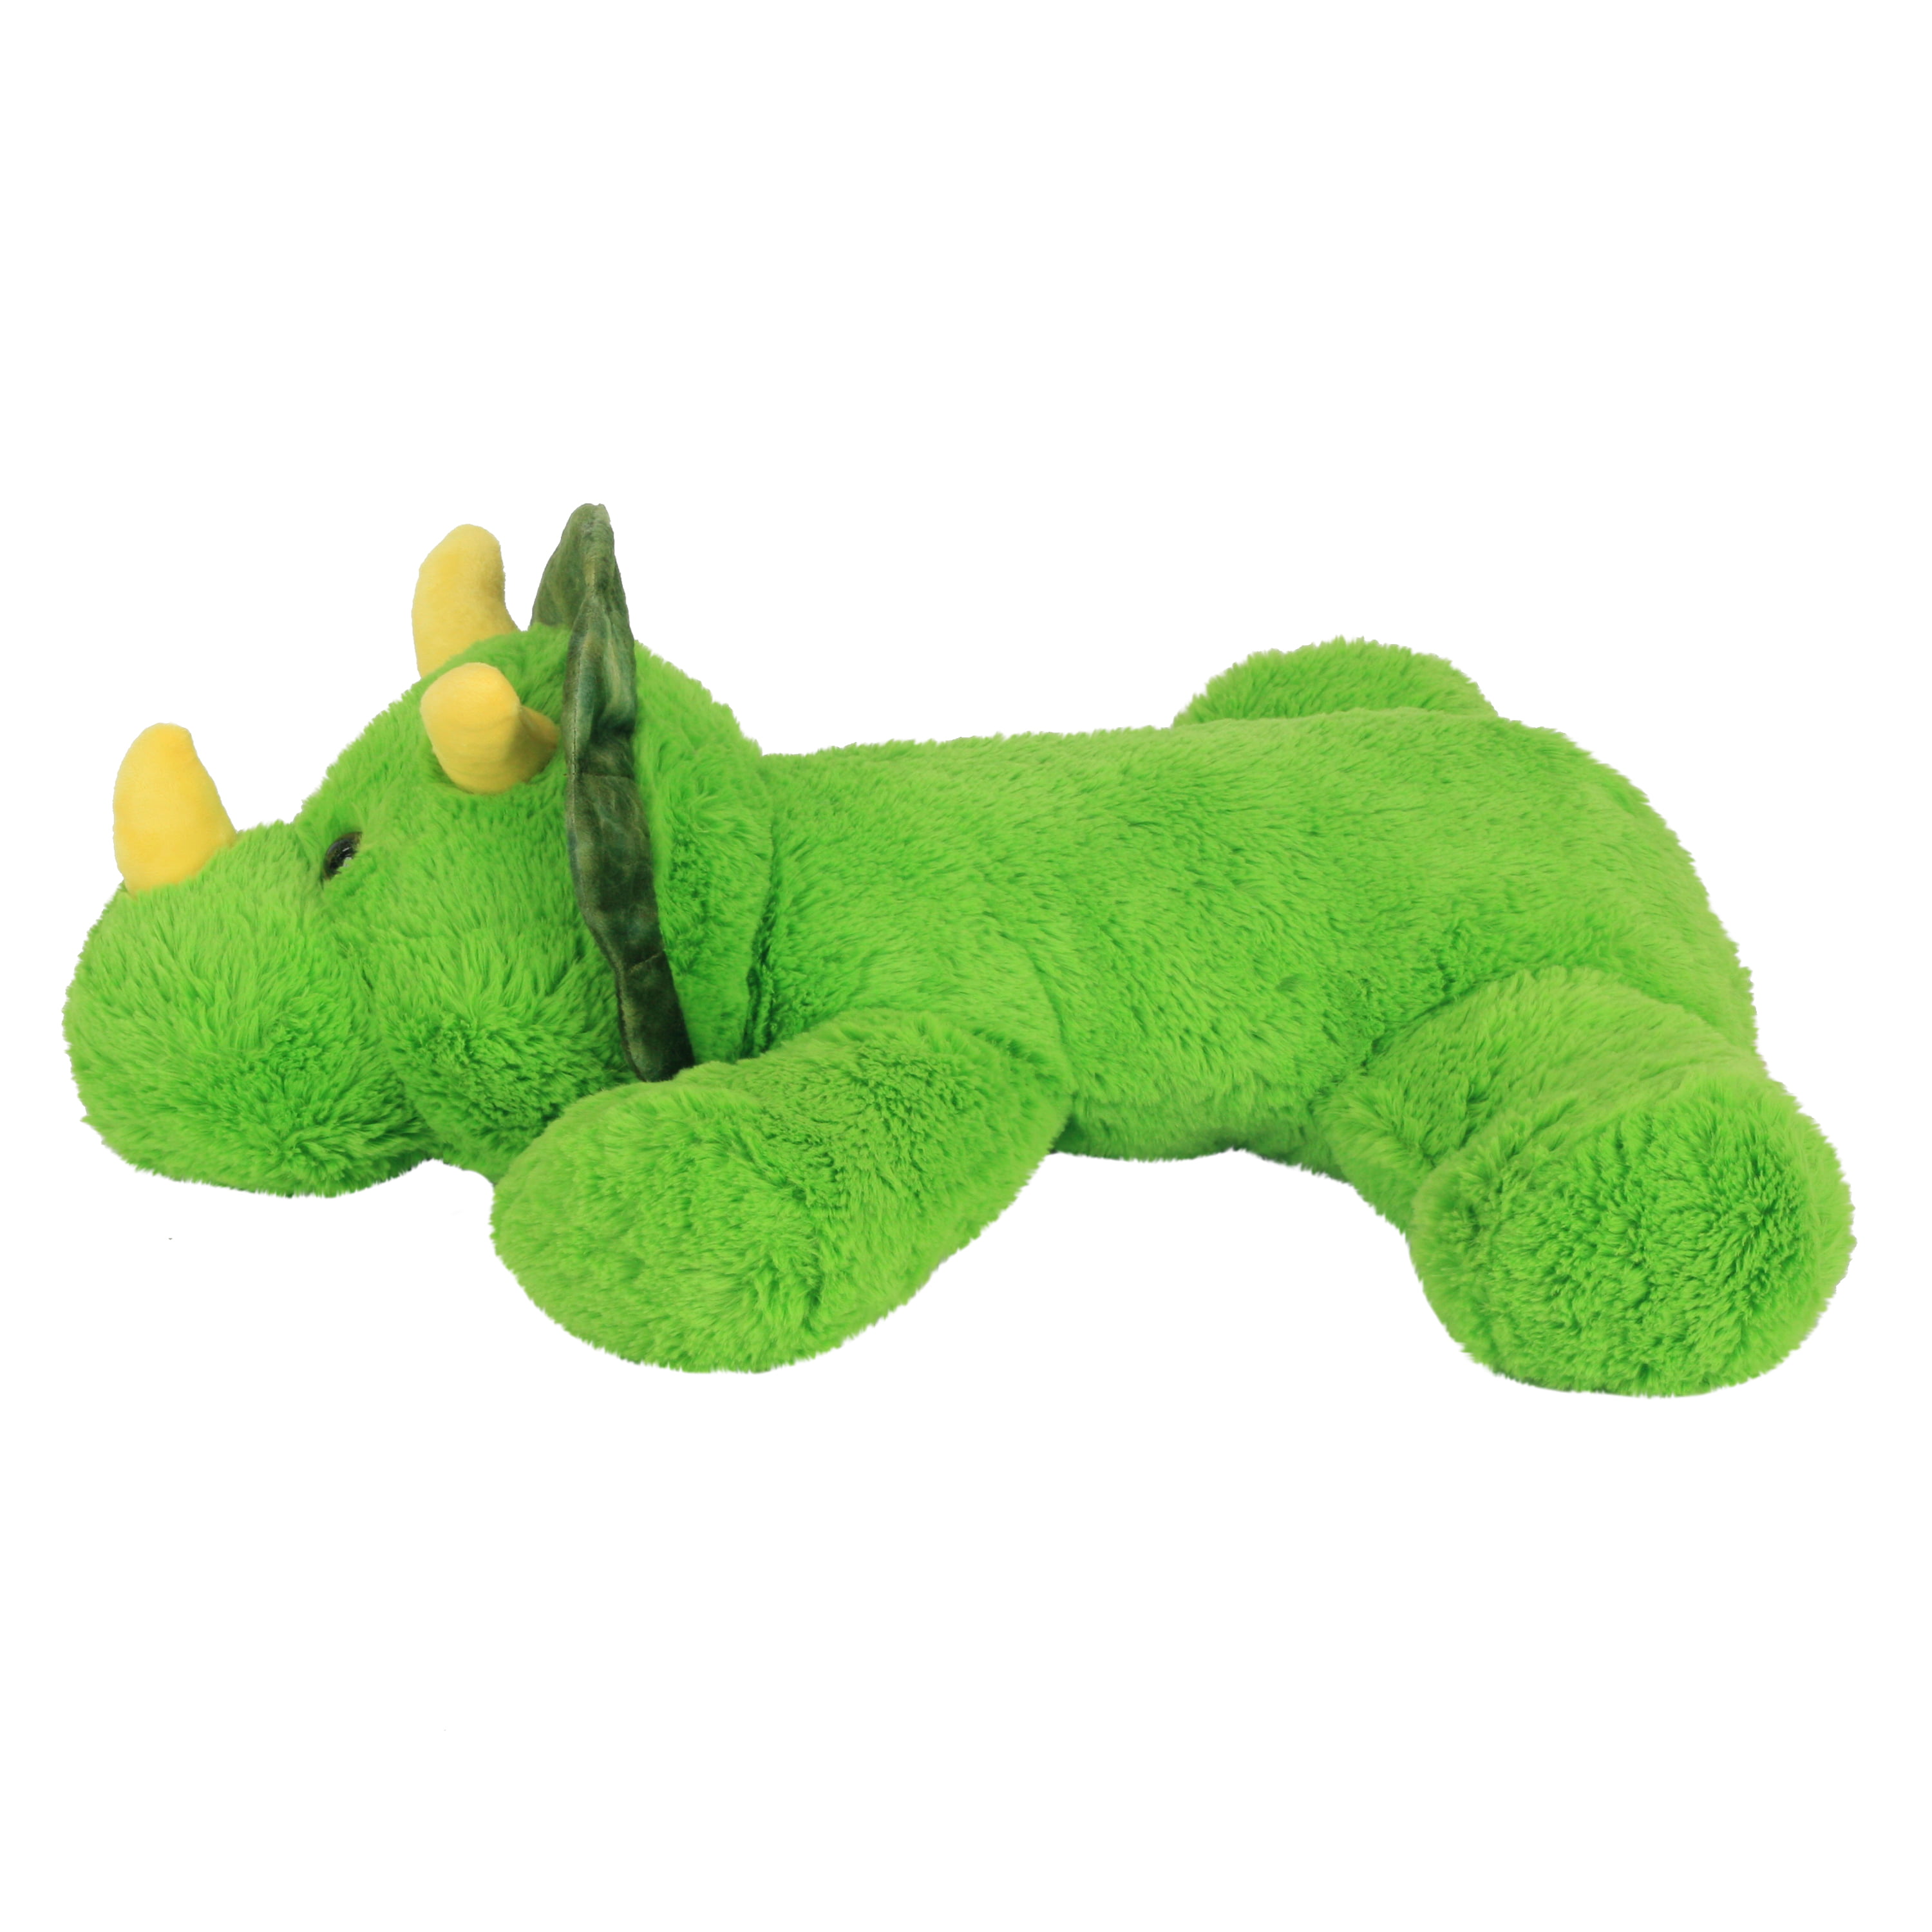 dinosaur stuffed animal walmart